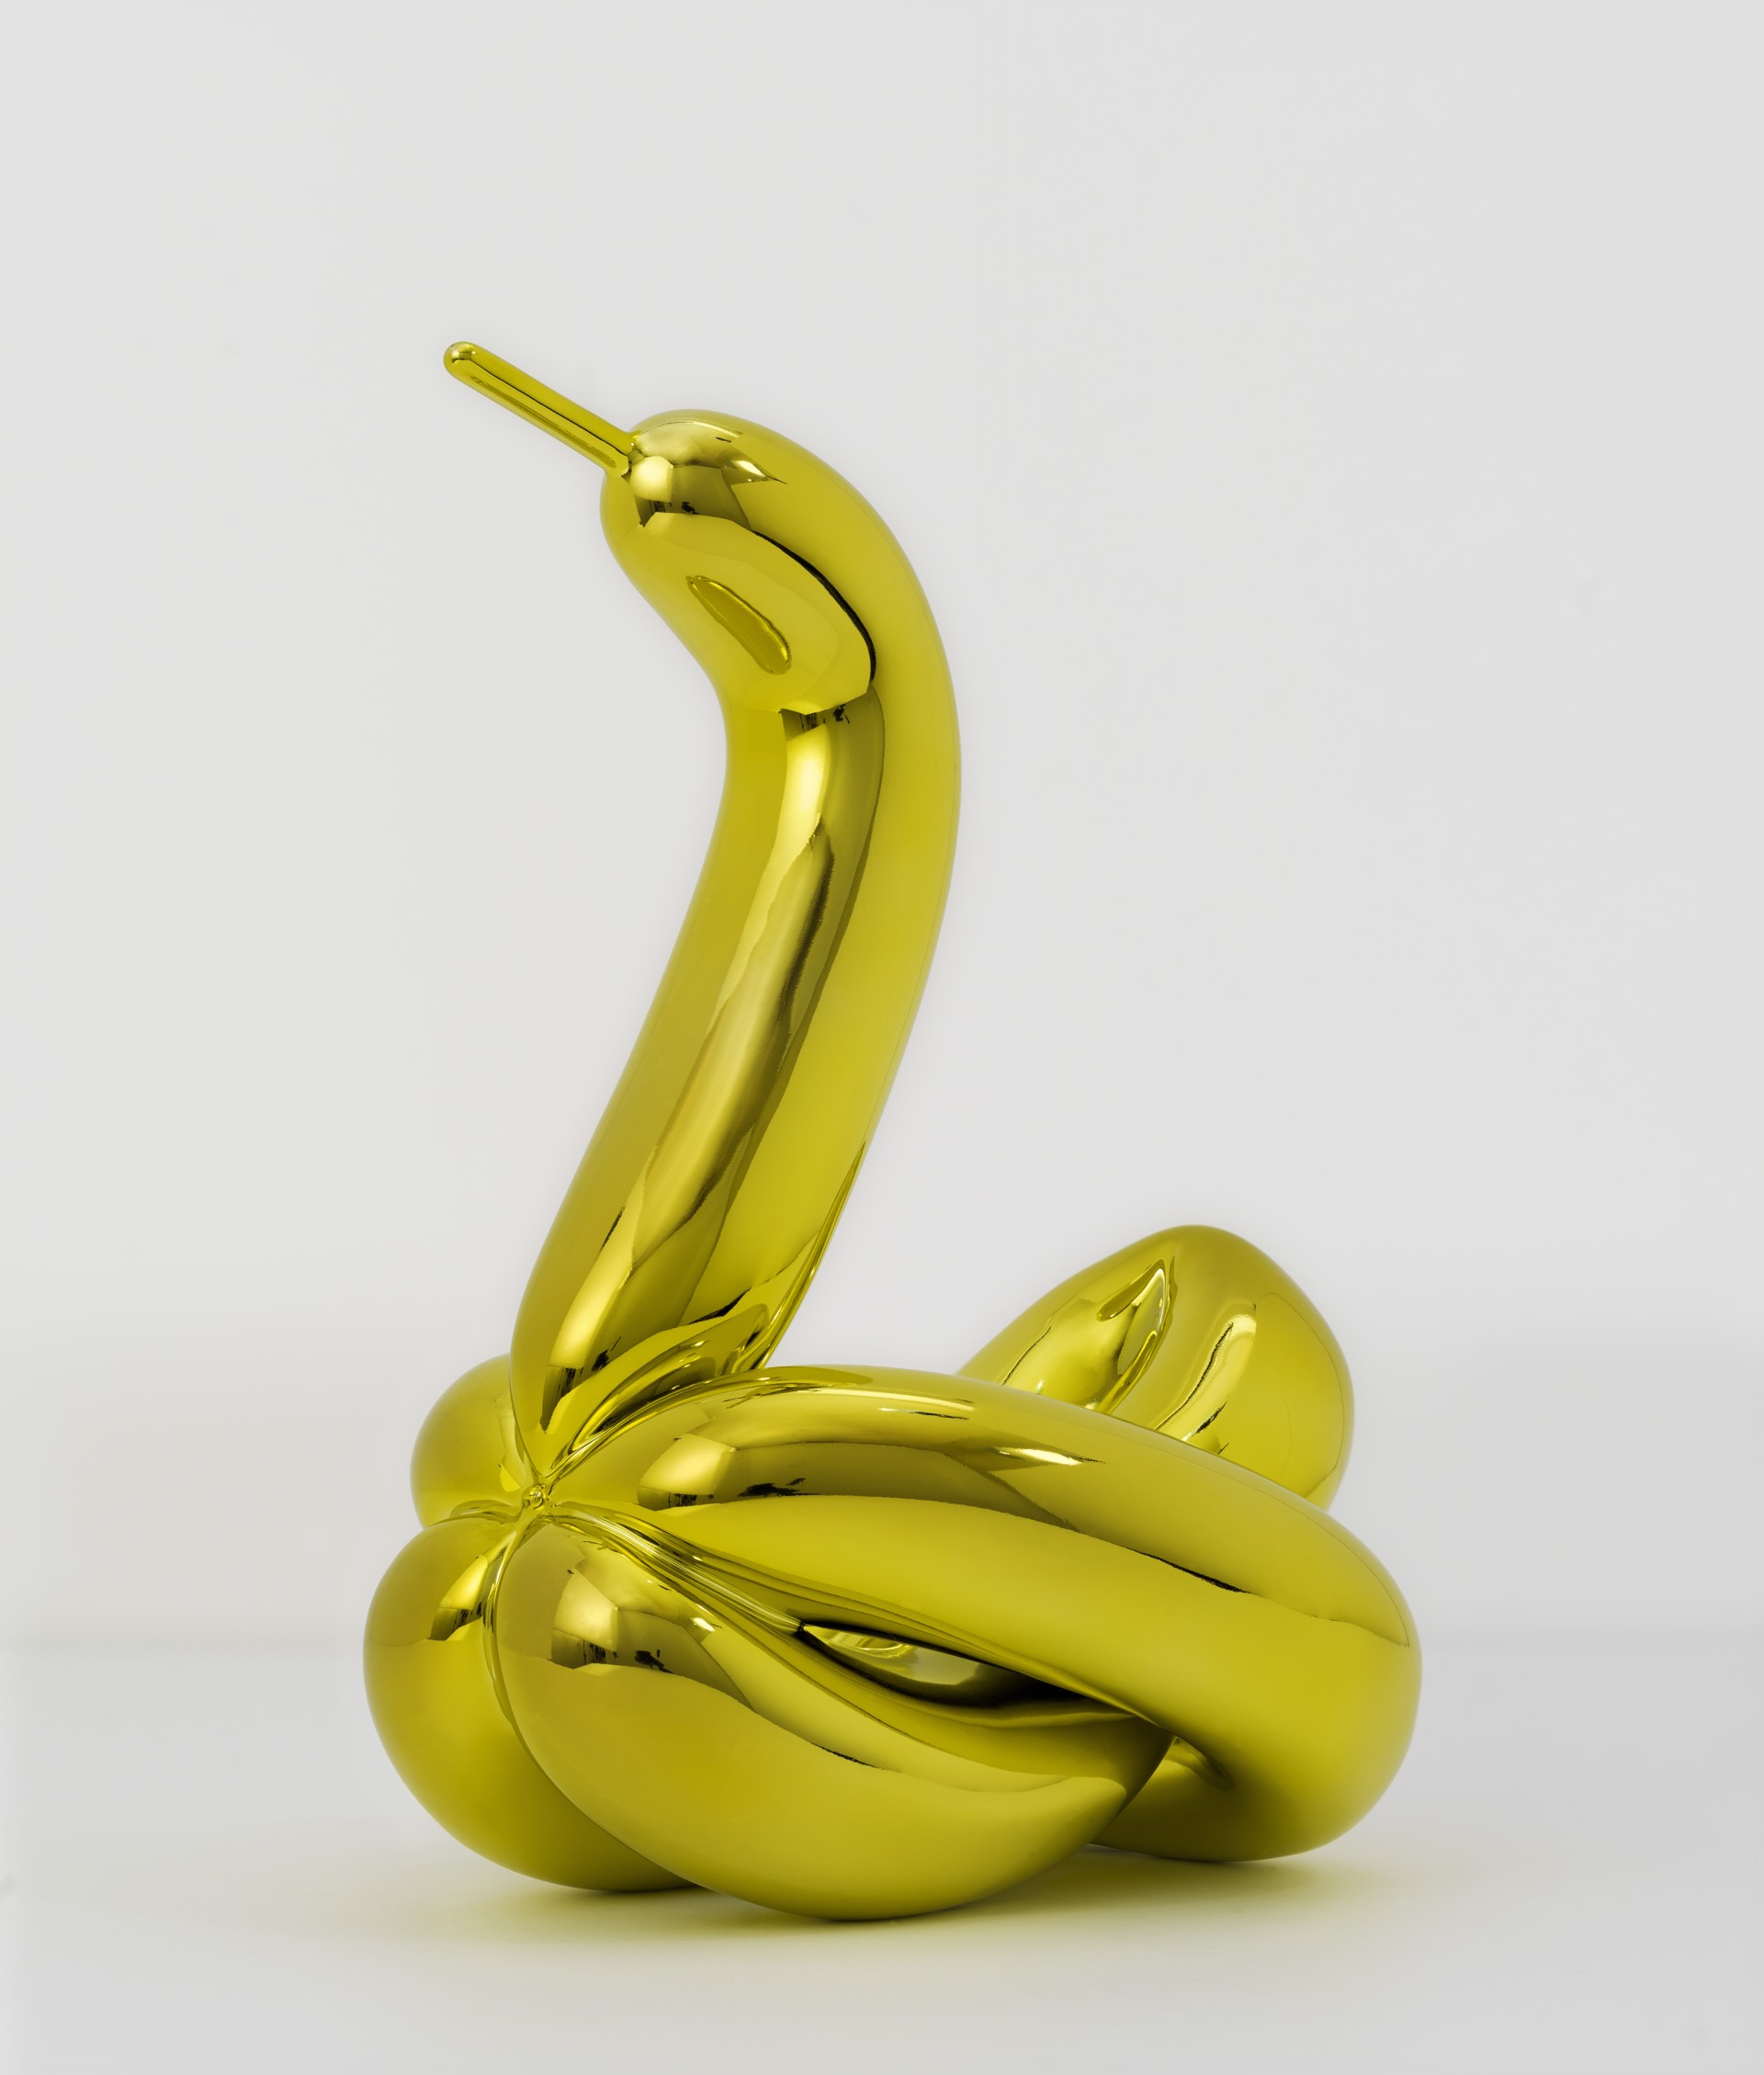 Swan (Yellow) By Jeff Koons by Jeff Koons